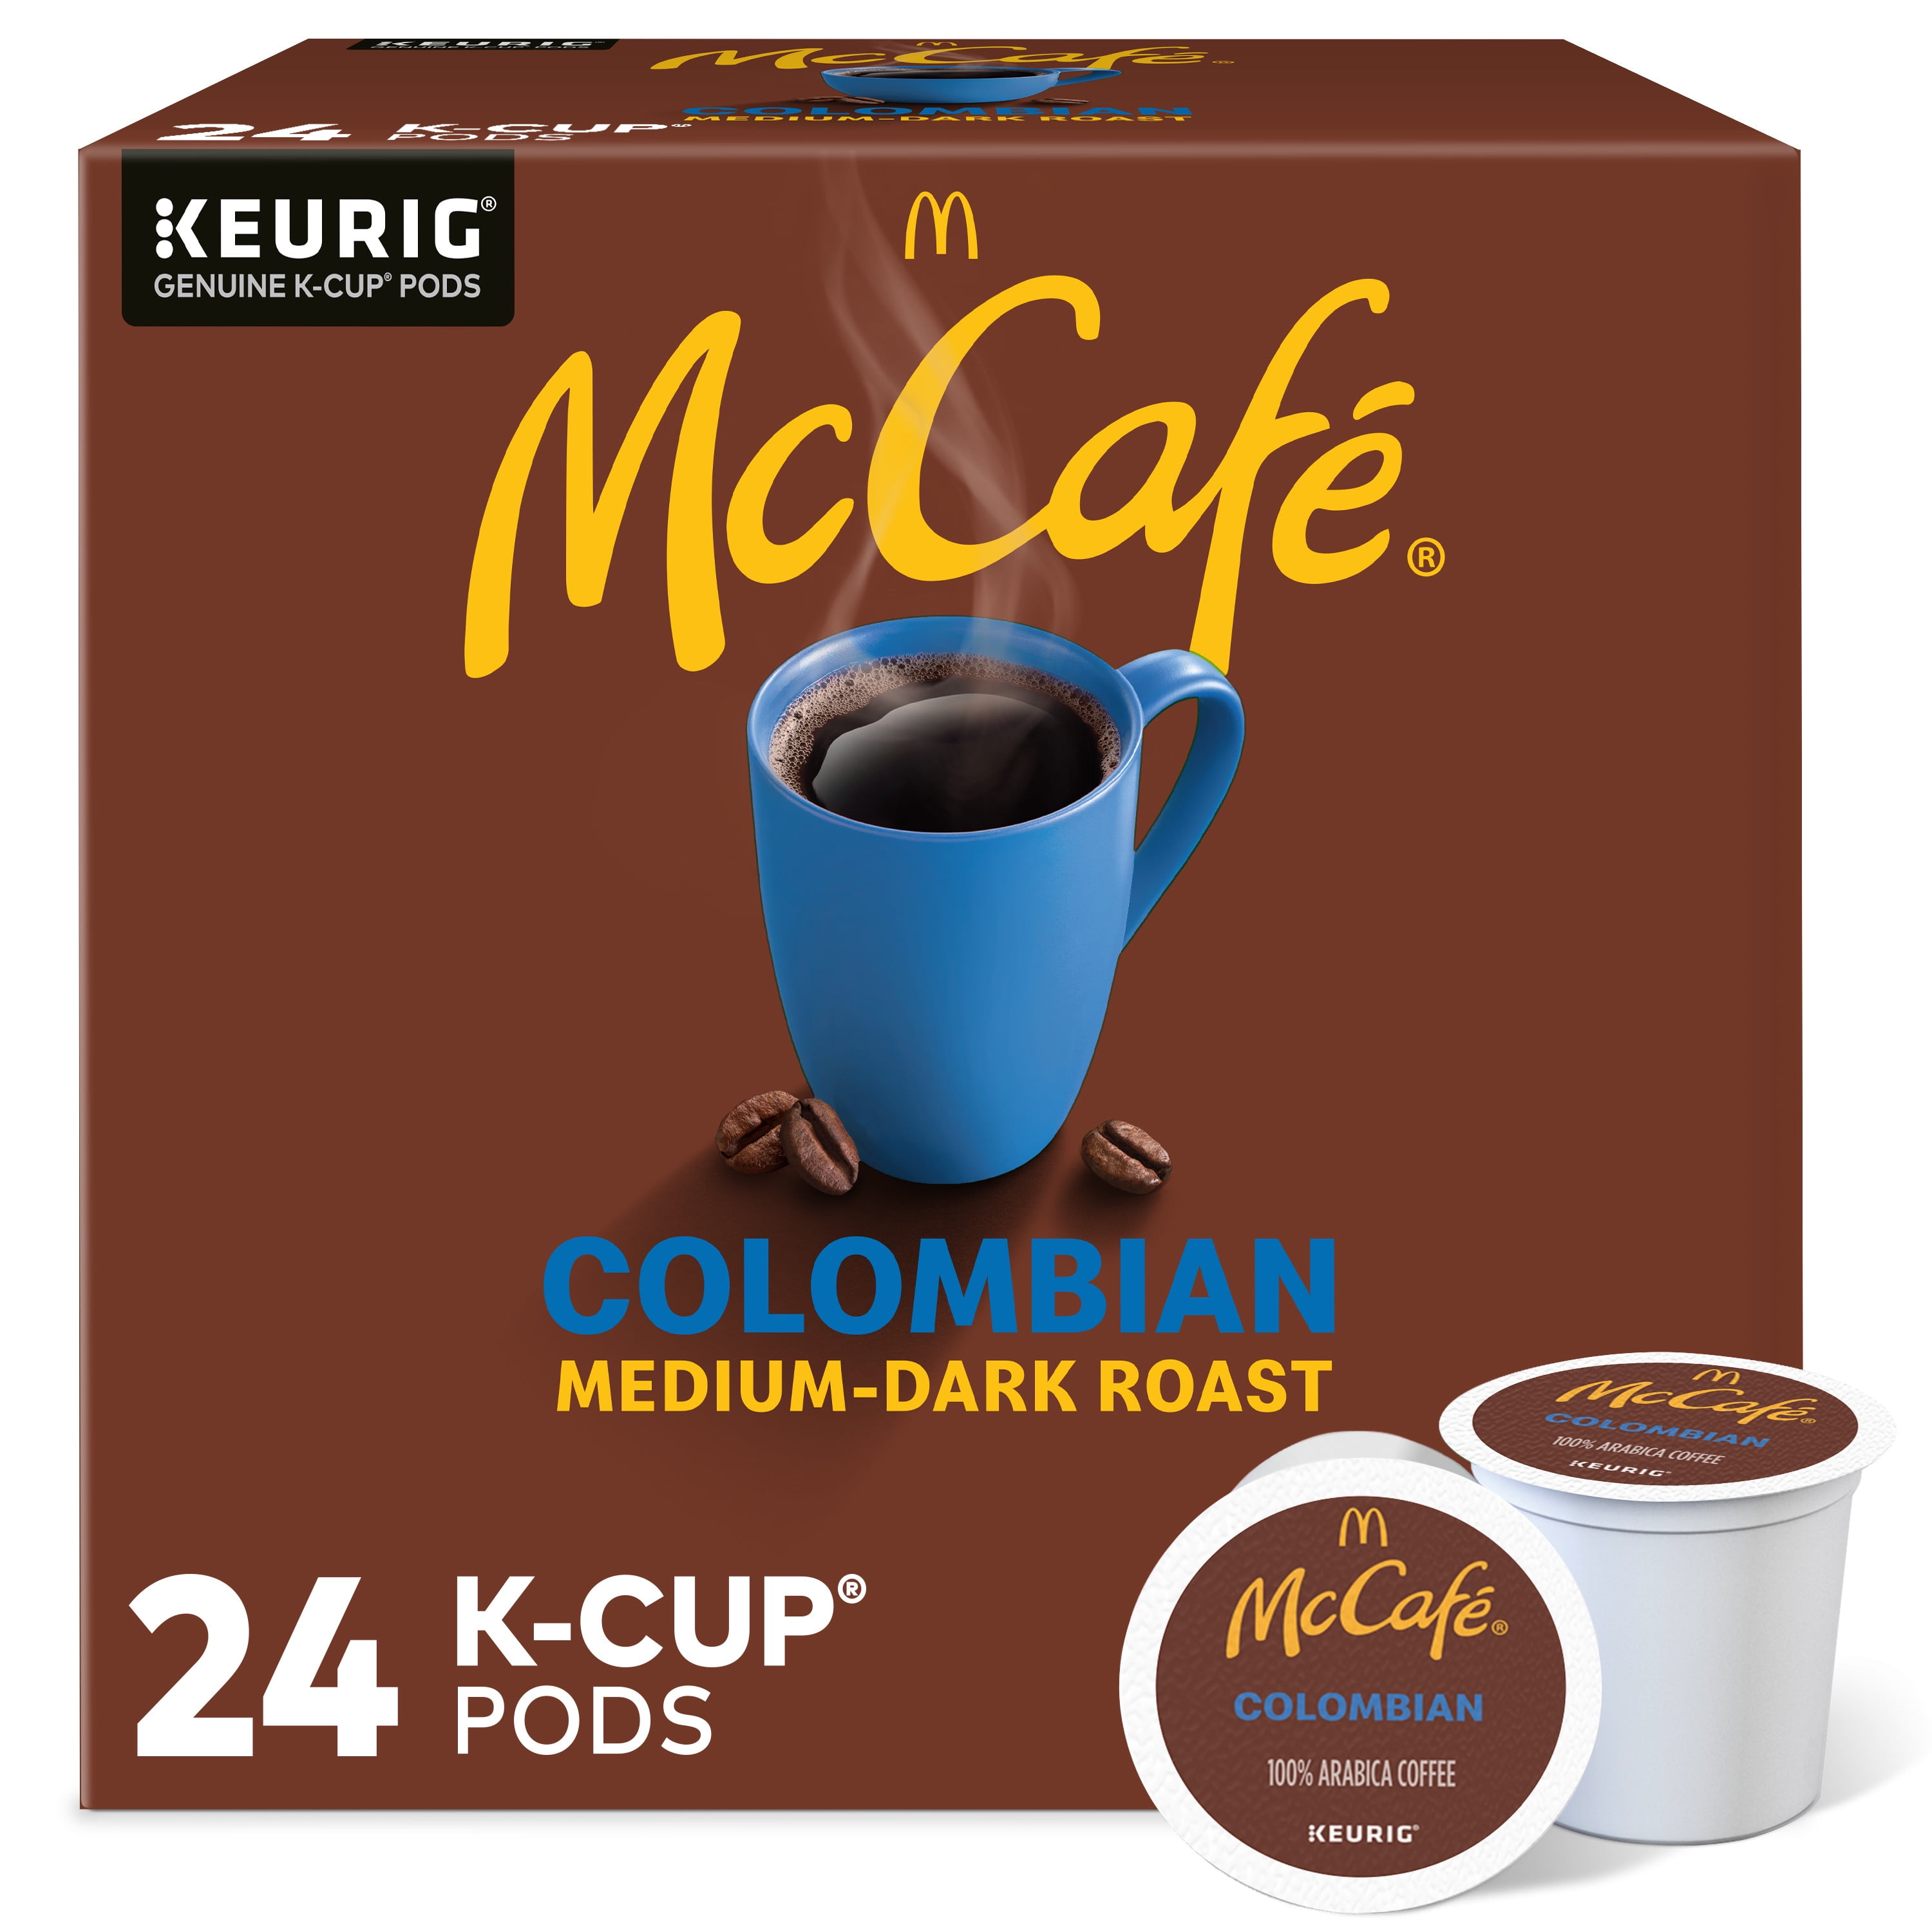 McCafe, Colombian Medium-Dark Roast K-Cup Coffee Pods, 24 Count